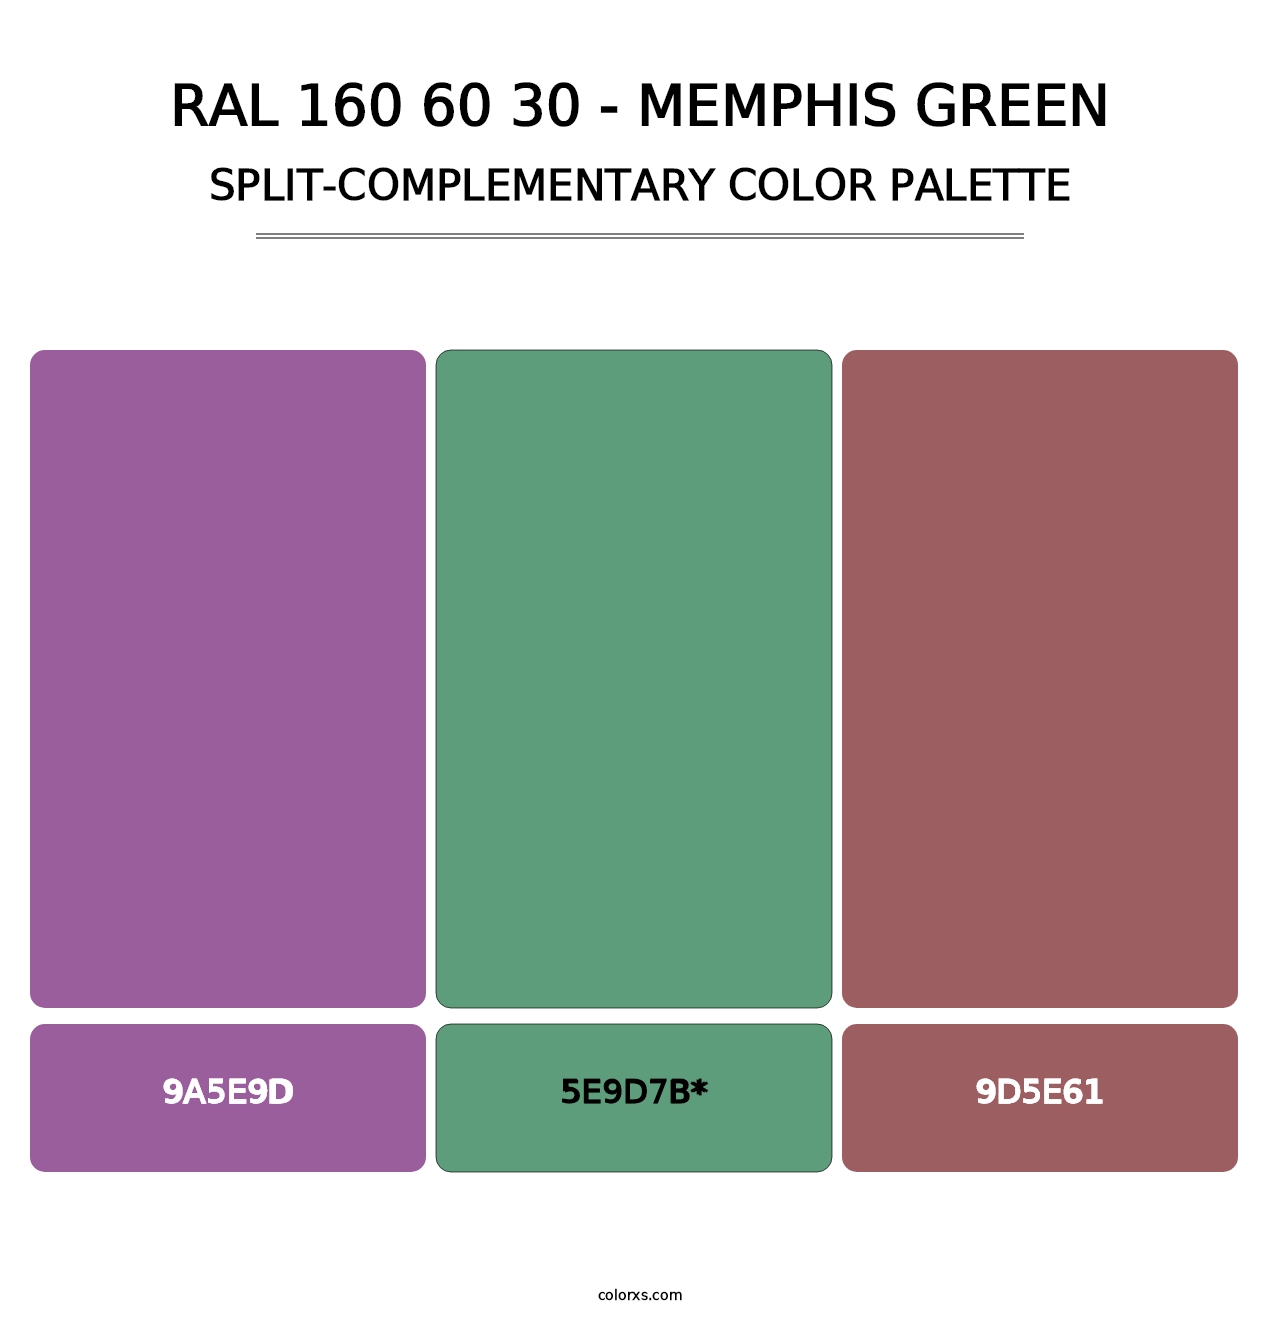 RAL 160 60 30 - Memphis Green - Split-Complementary Color Palette